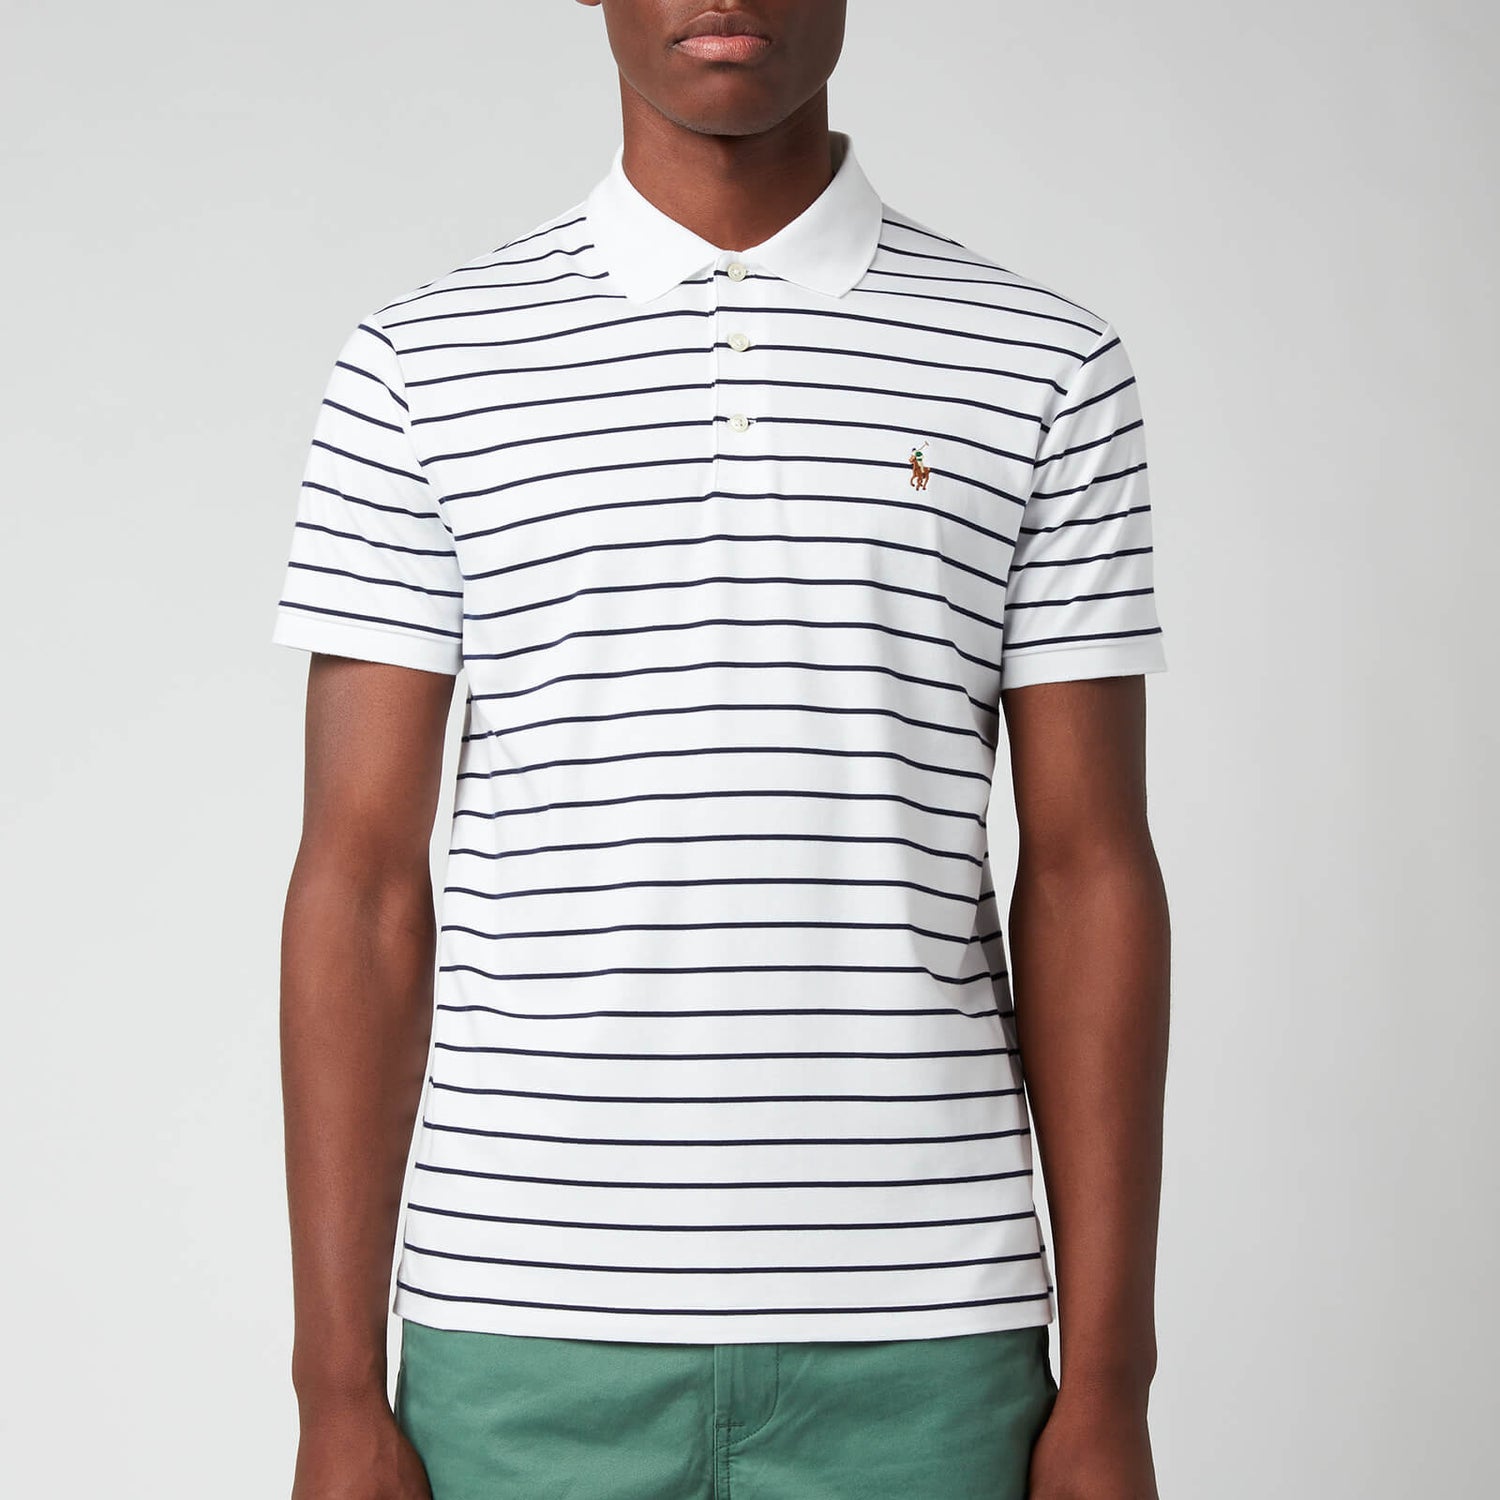 Polo Ralph Lauren Men's Pima Stripe Polo Shirt - White/French Navy